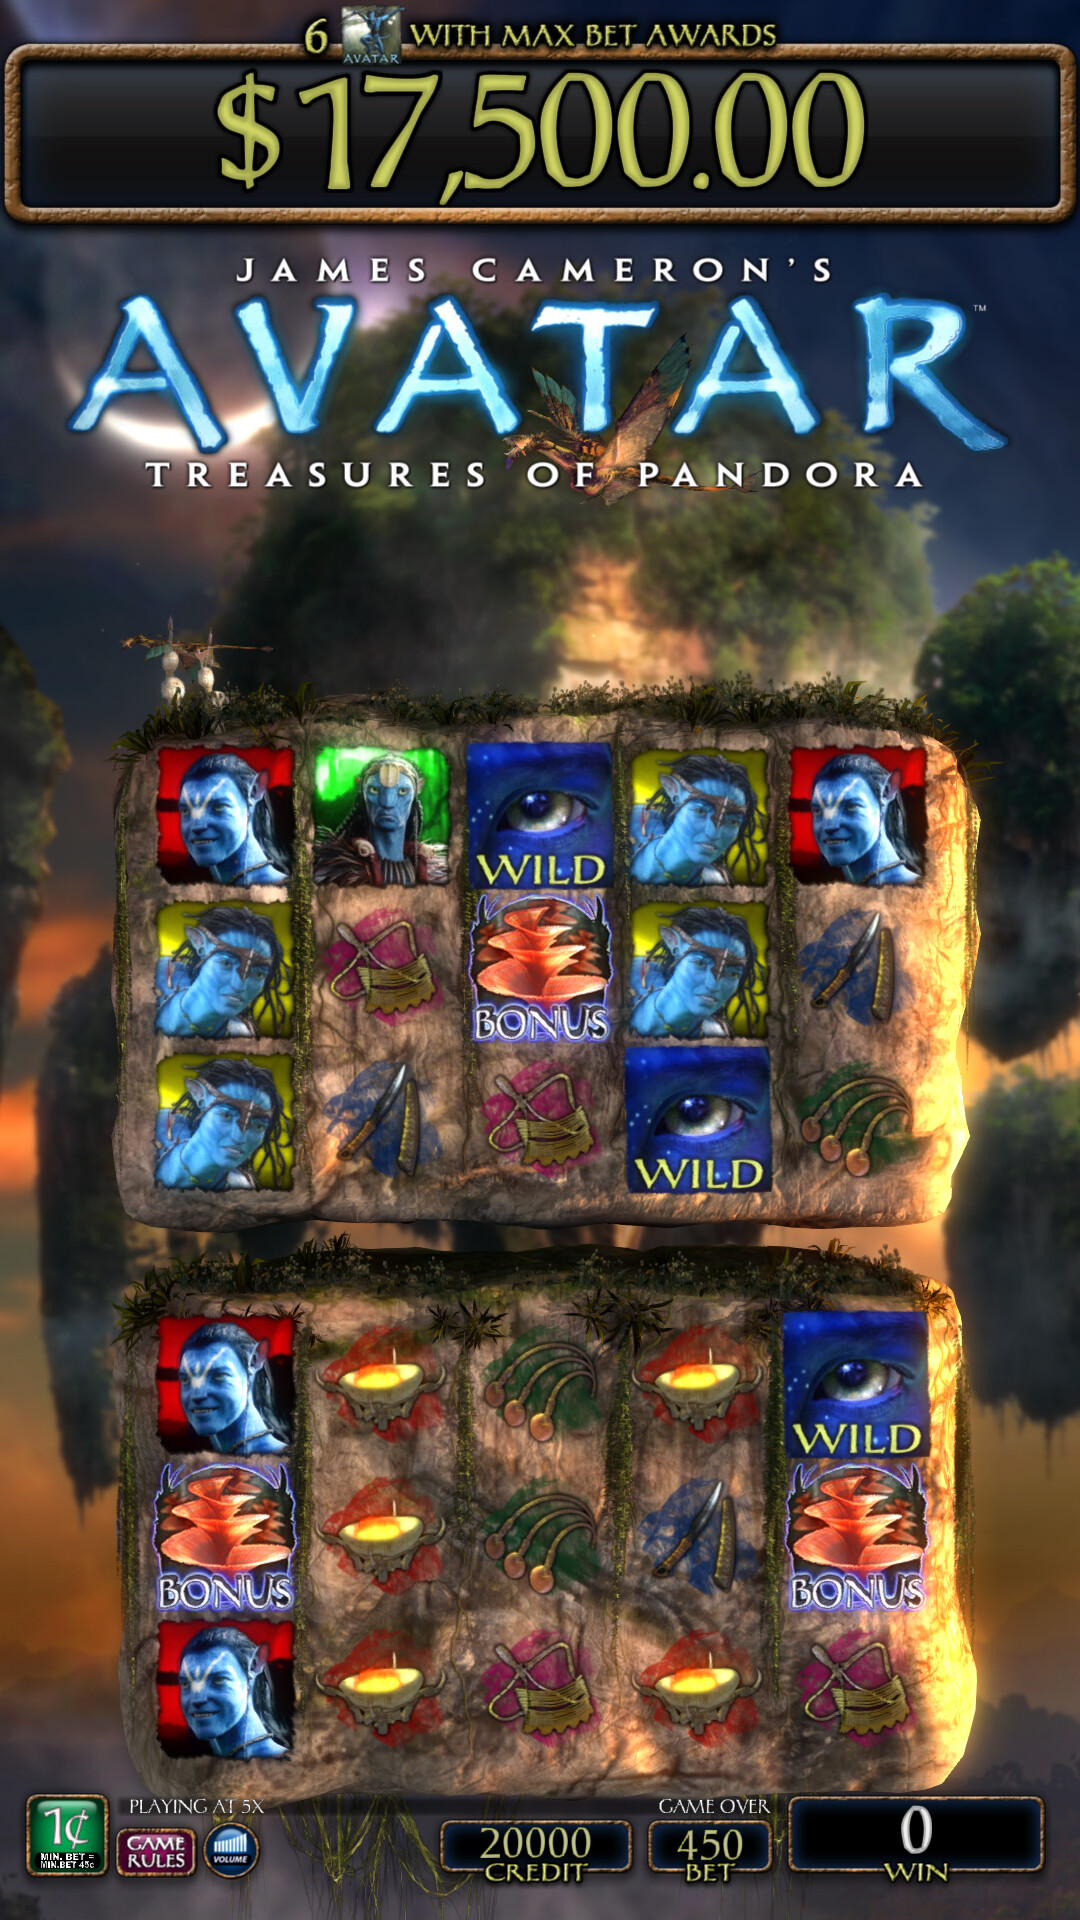 James Cameron's Avatar Treasures of Pandora